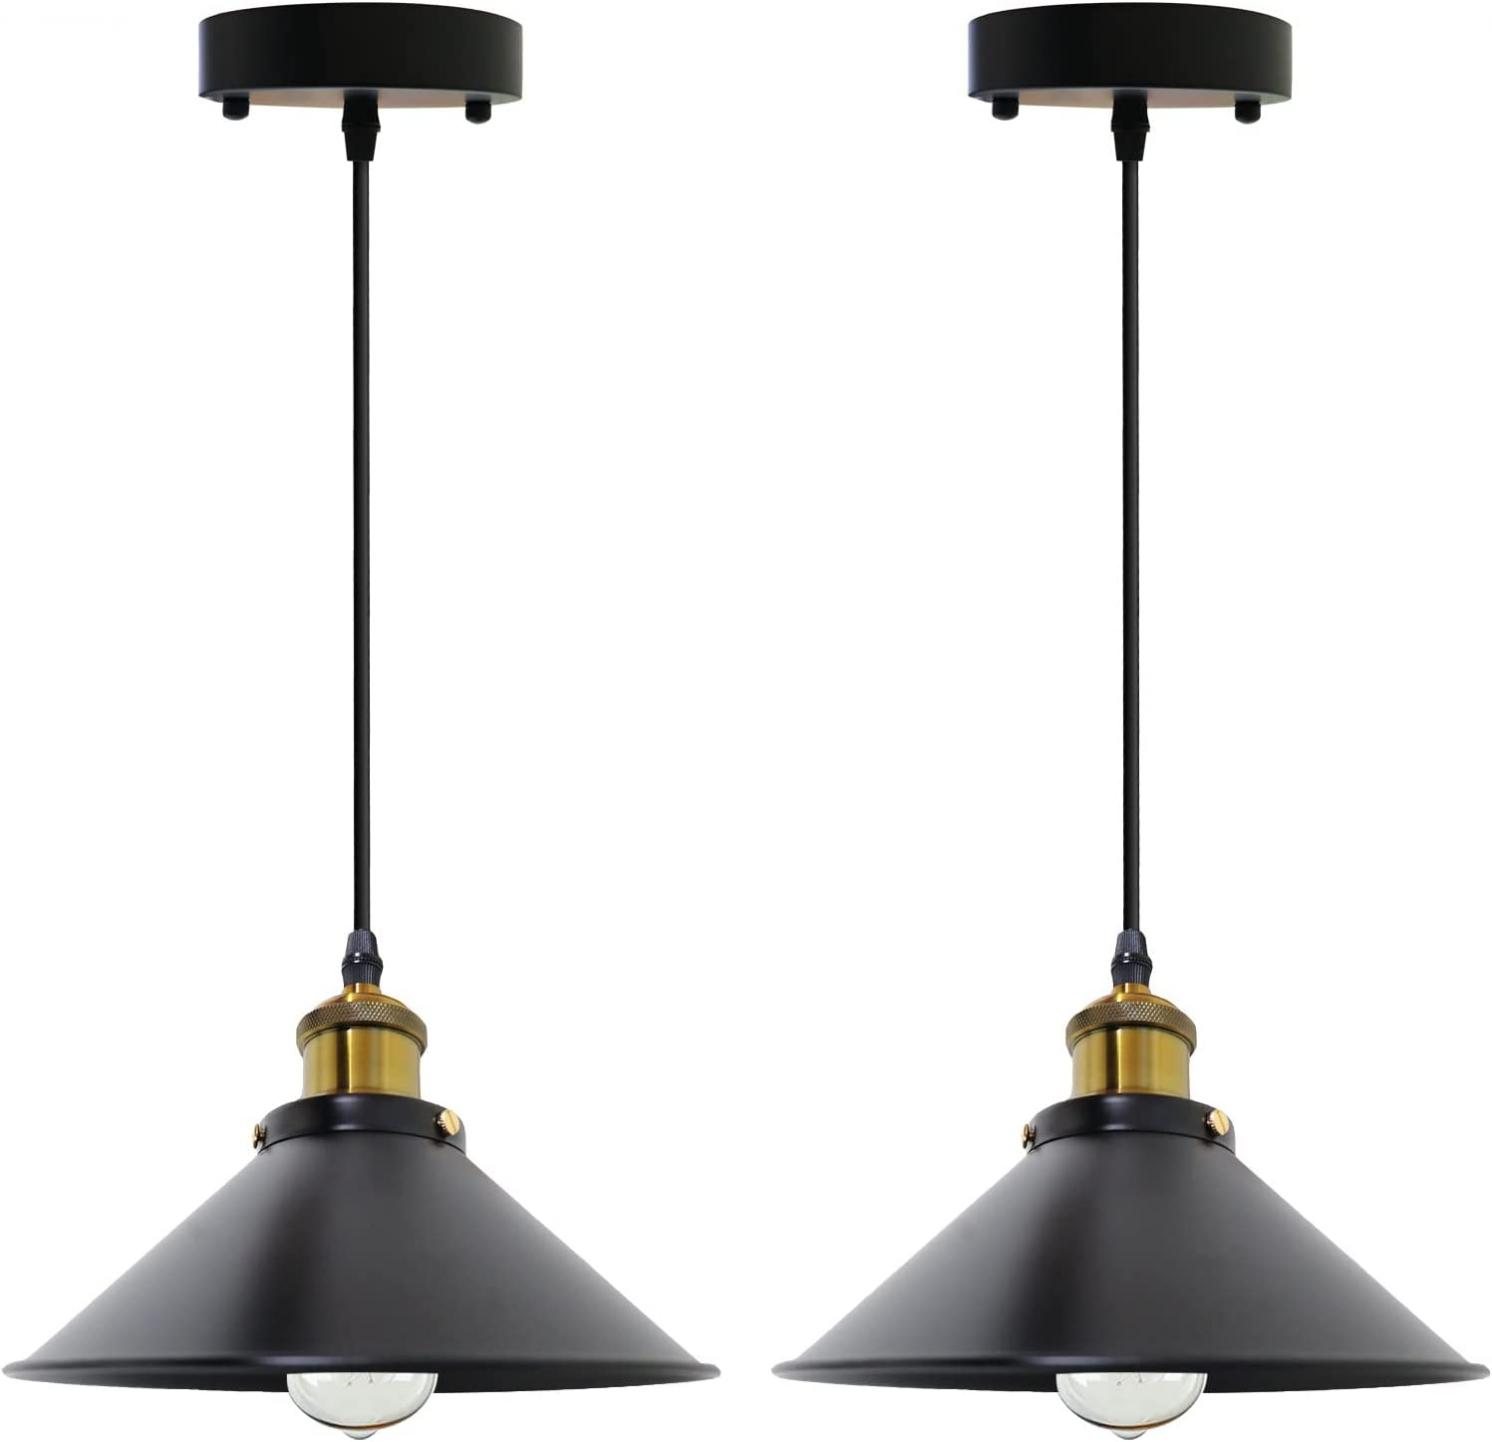 VTYXCTIGJ 2-Pack Vintage Industrial Black Pendant Light for Kitchen Island,Retro Pendant Light Fixtures E26 E27 Base,Hanging Ceiling Light Lamp Fixture, Bar Lights Hanging,German VDE Listed D8.7H6.3in